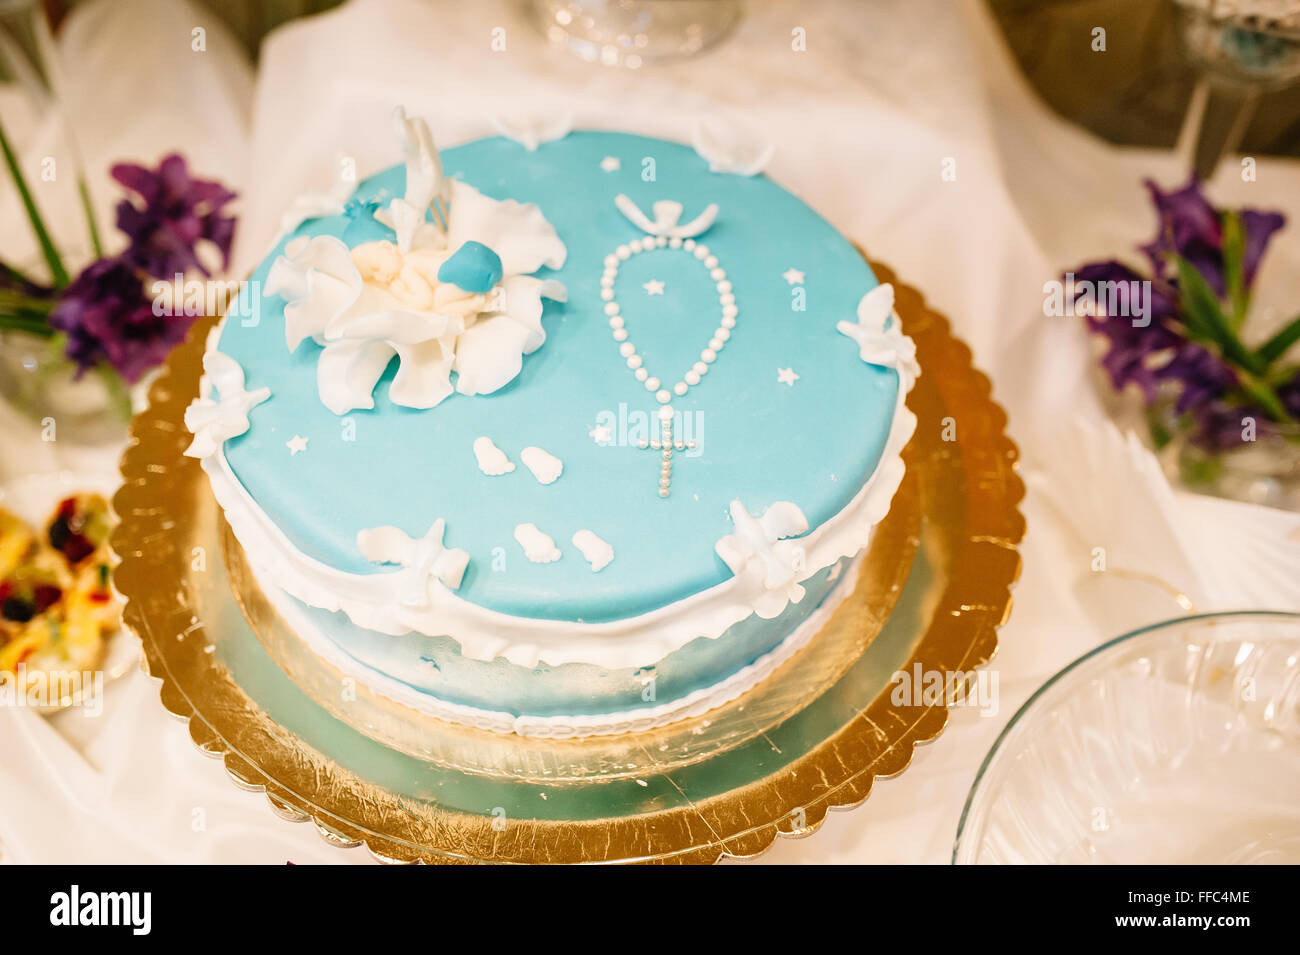 Baby birthday decor or baby shower sweet cake Stock Photo